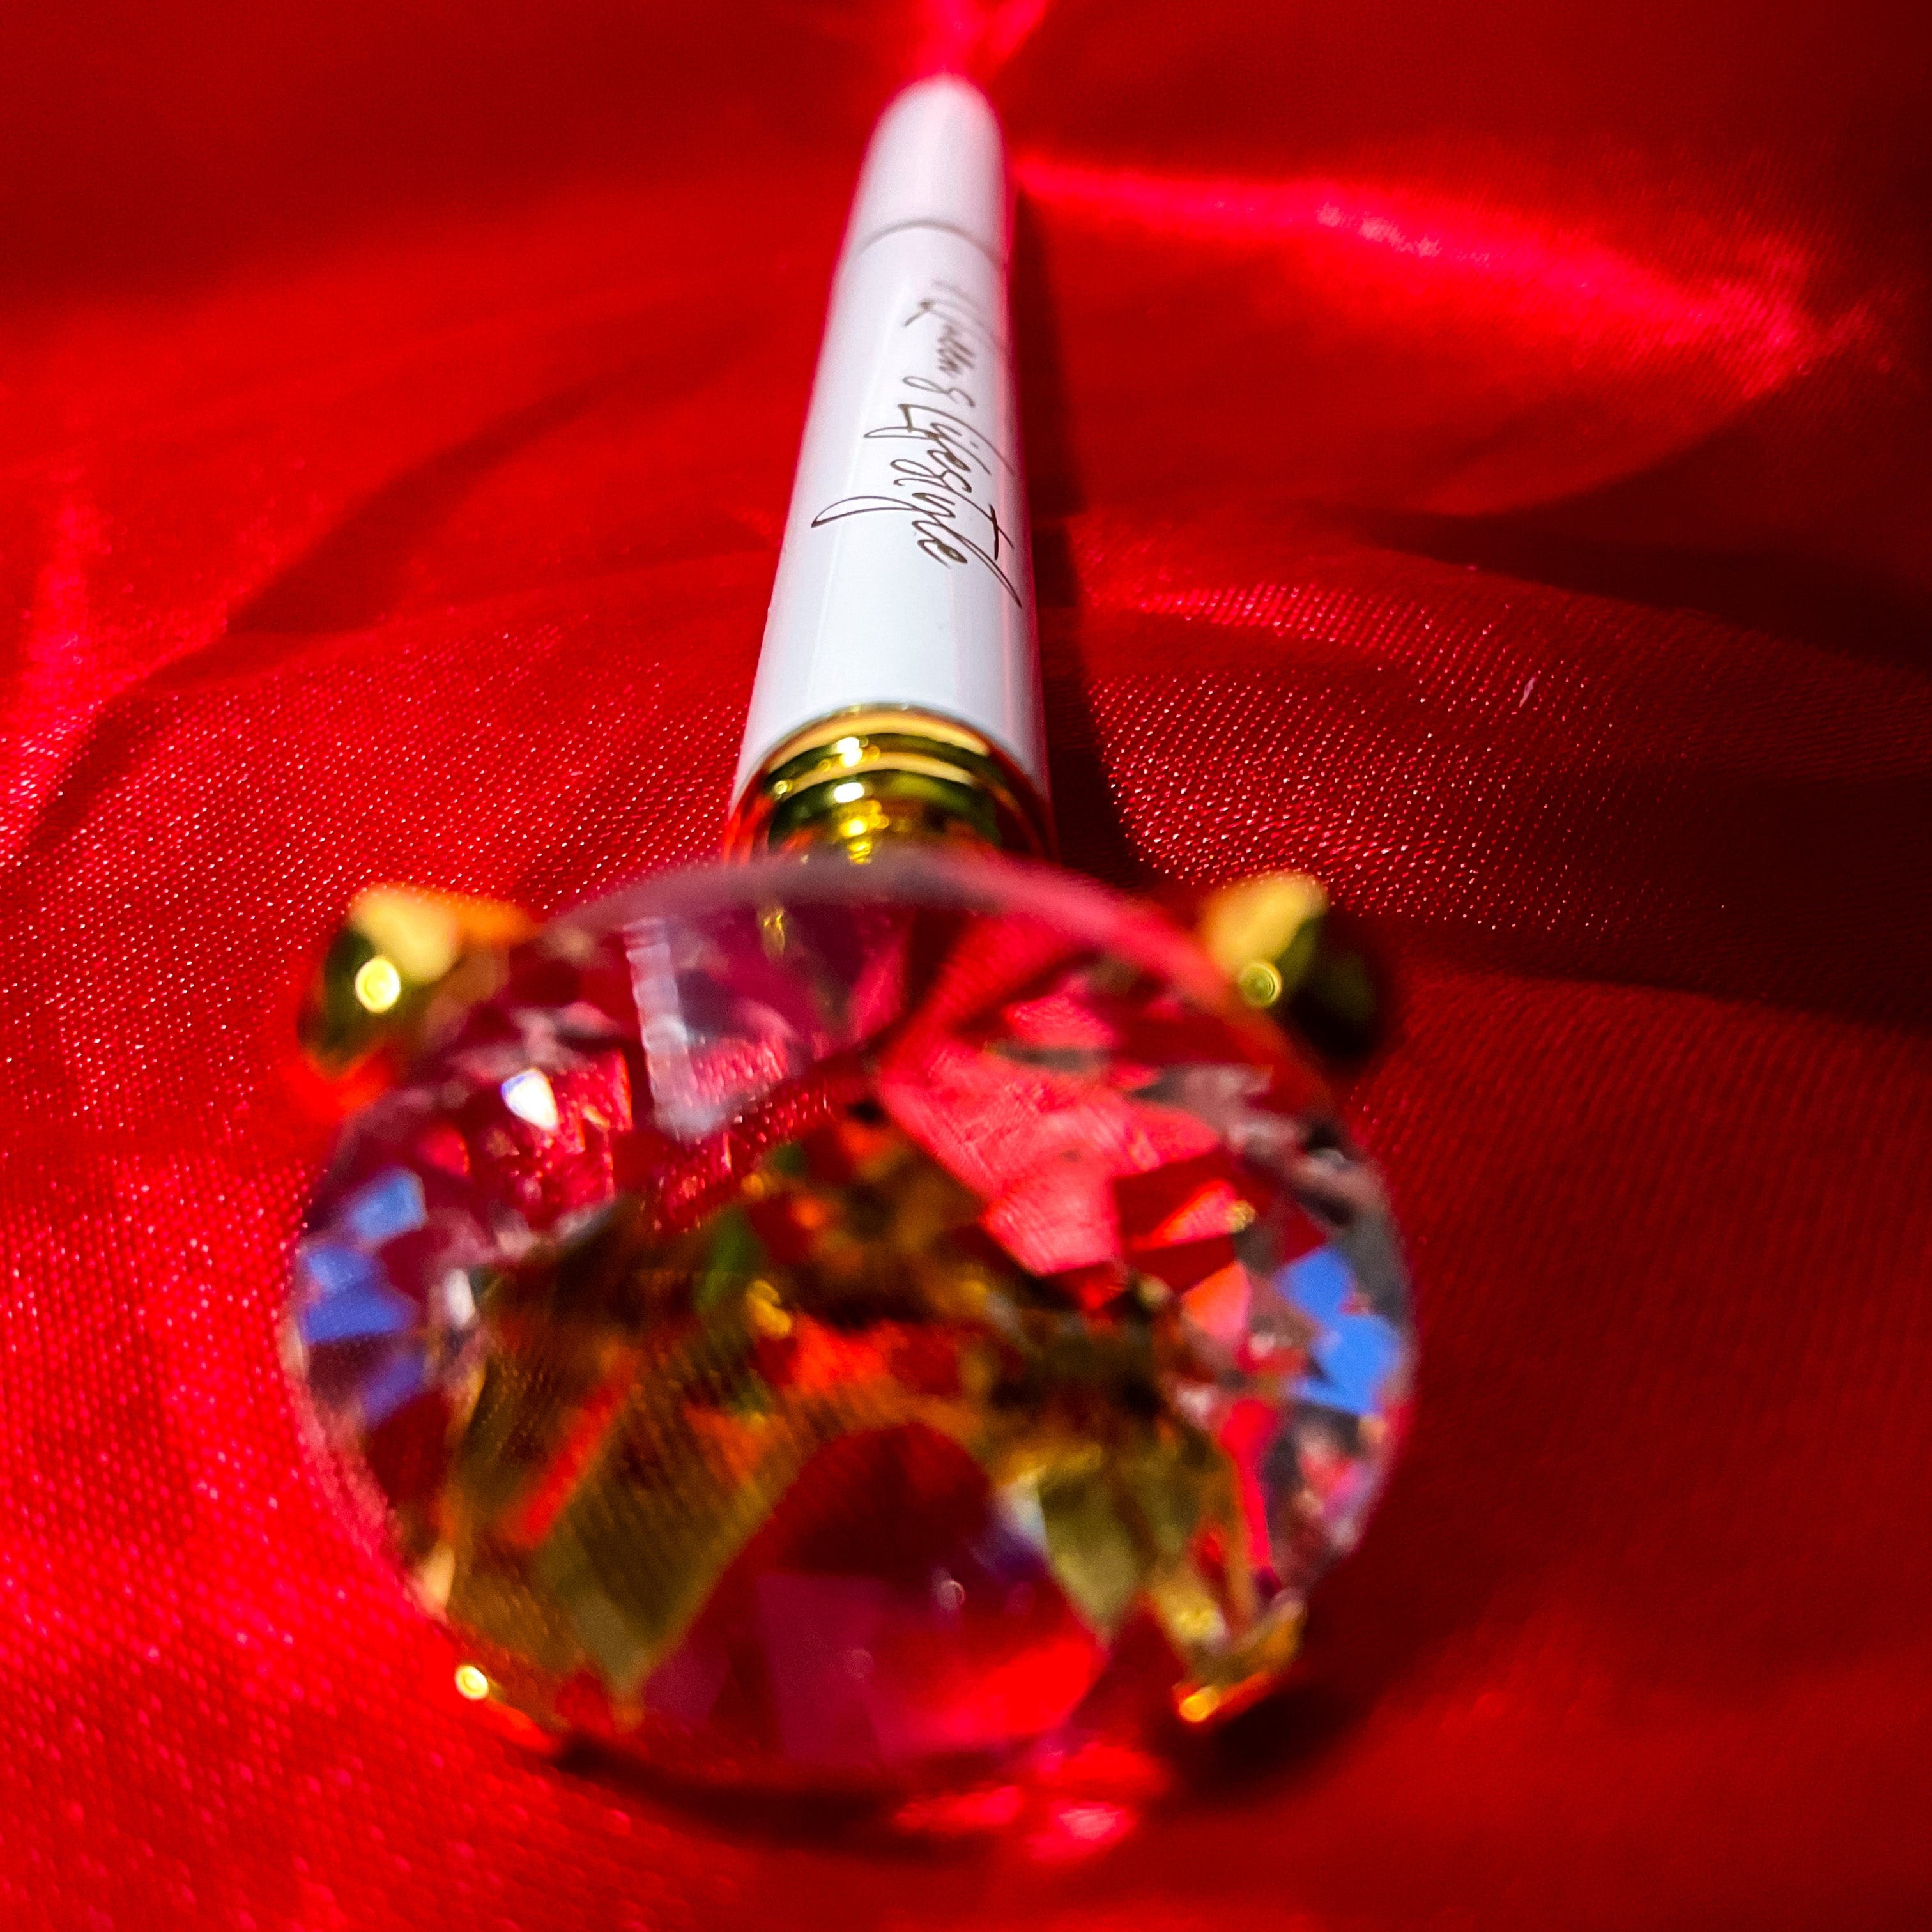 Shiny Diamond Button Crystal Pen - Elegant Ballpoint Writing – CHL